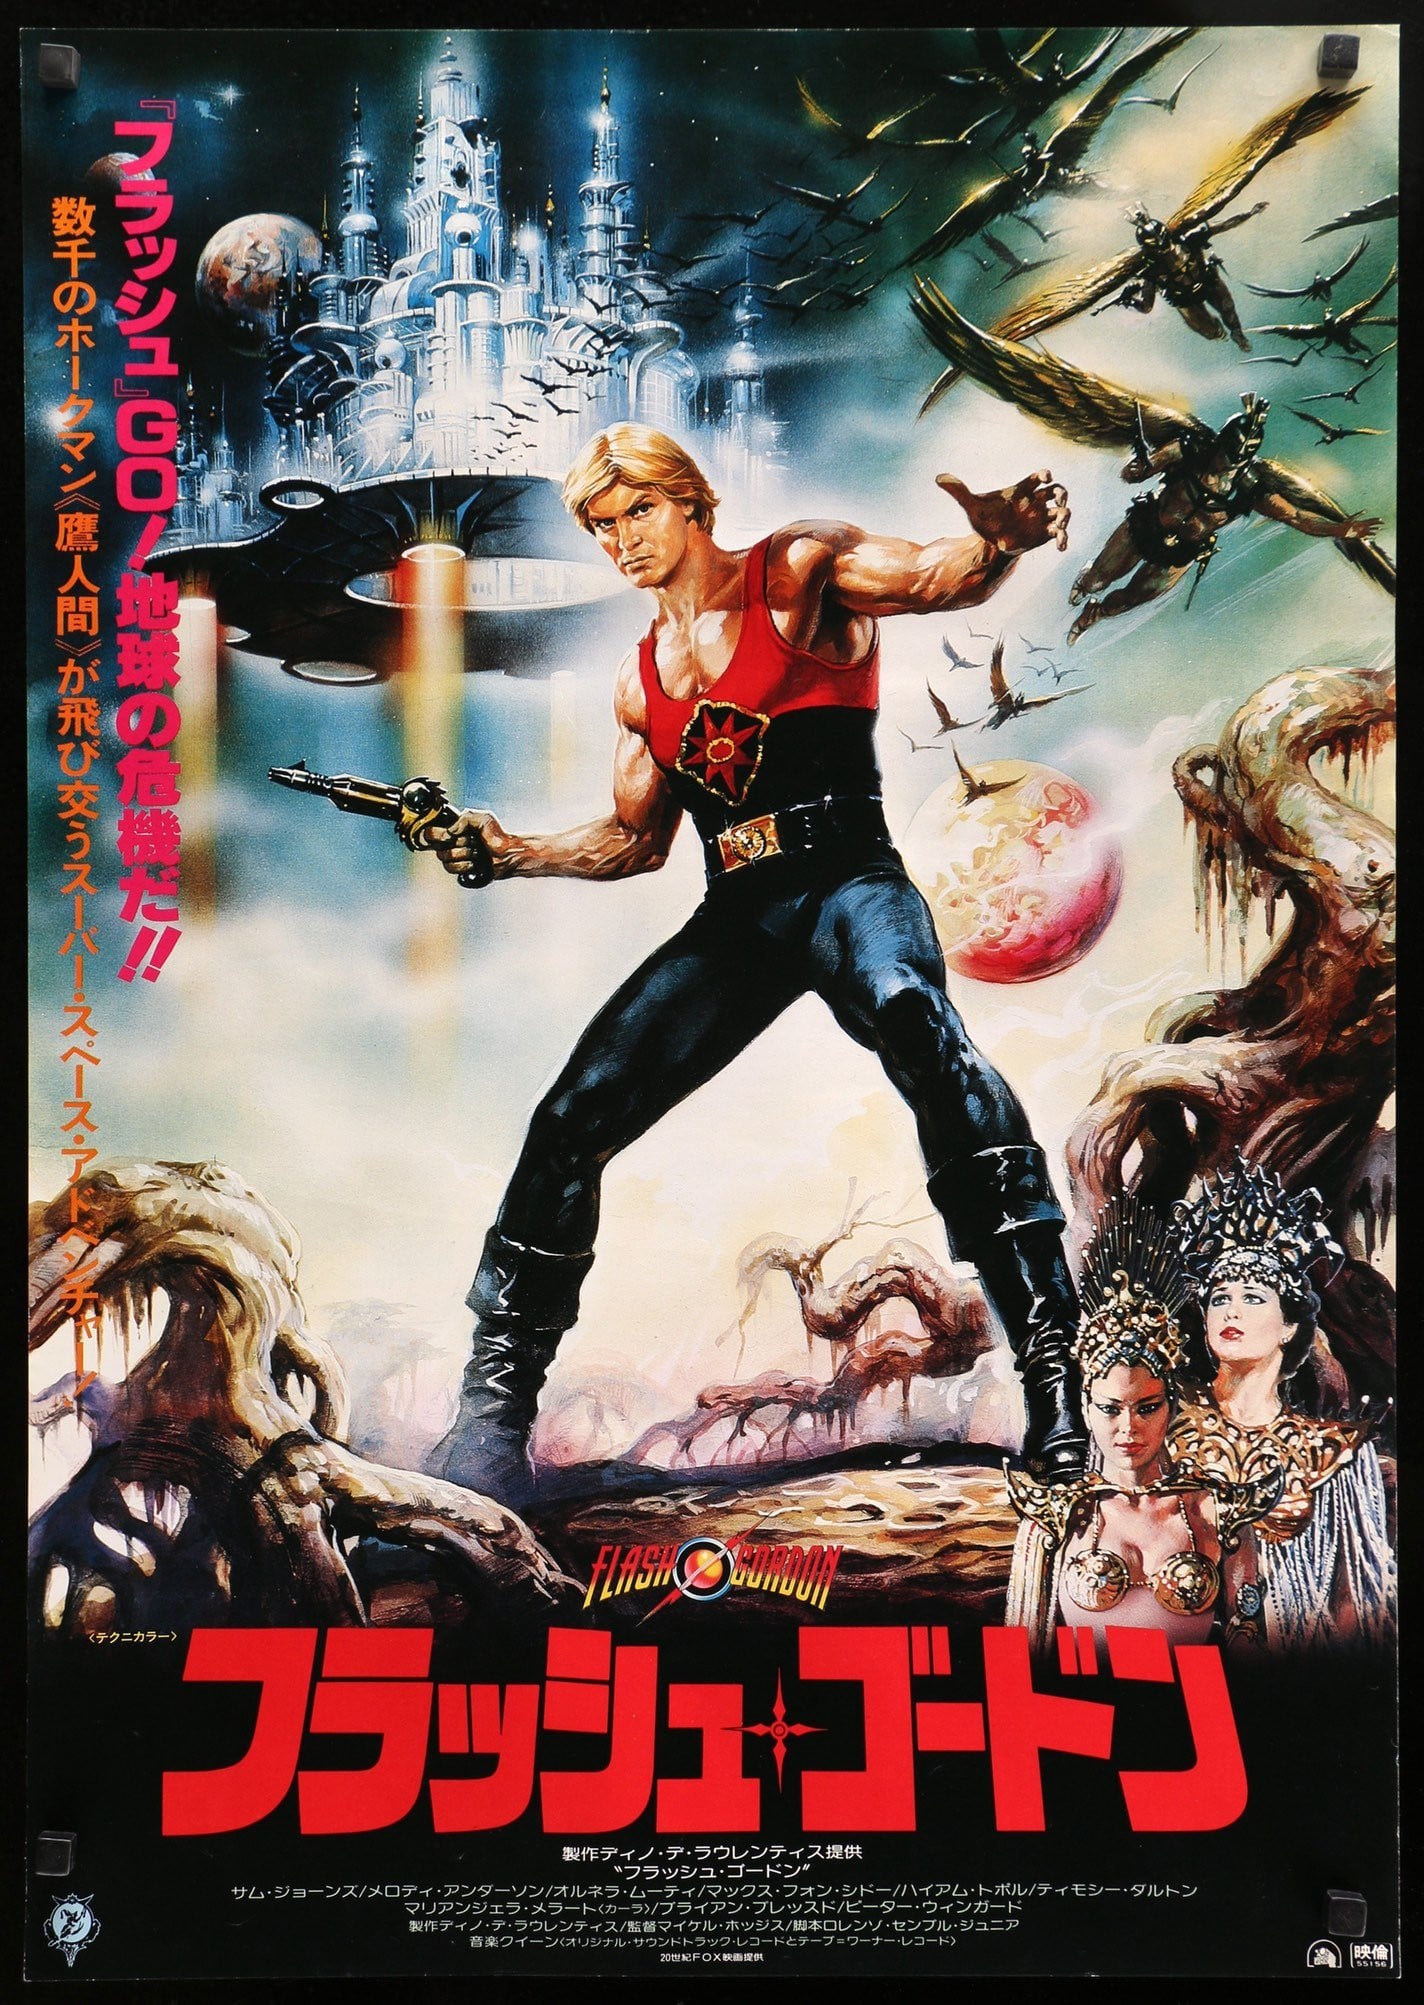 Flash Gordon (1980) original movie poster for sale at Original Film Art